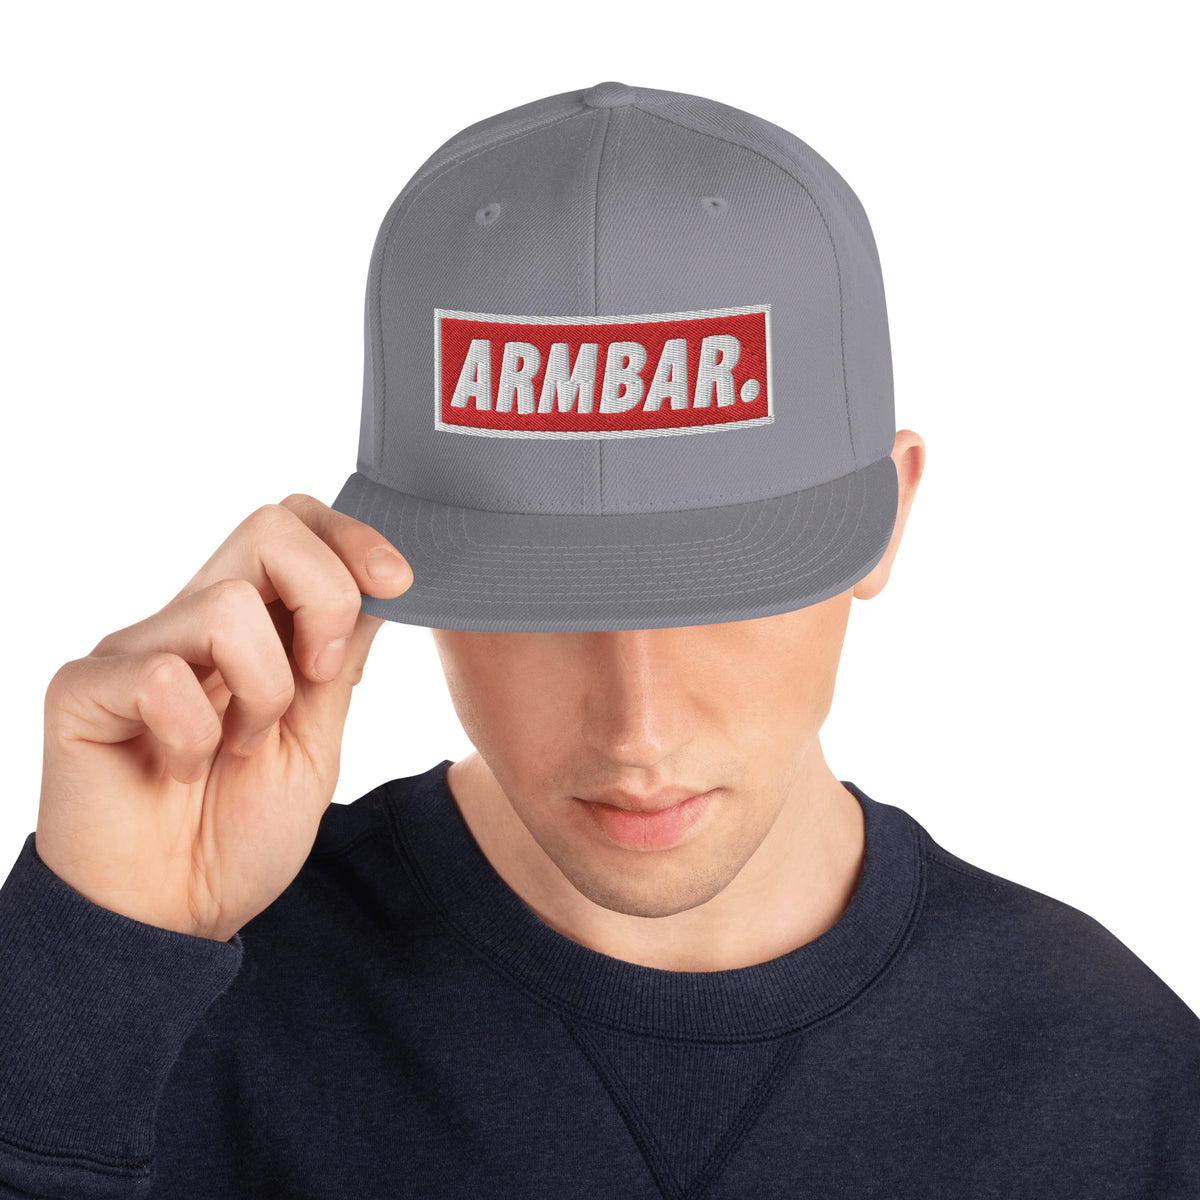 BJJ Text Armbar Red Snapback Hat